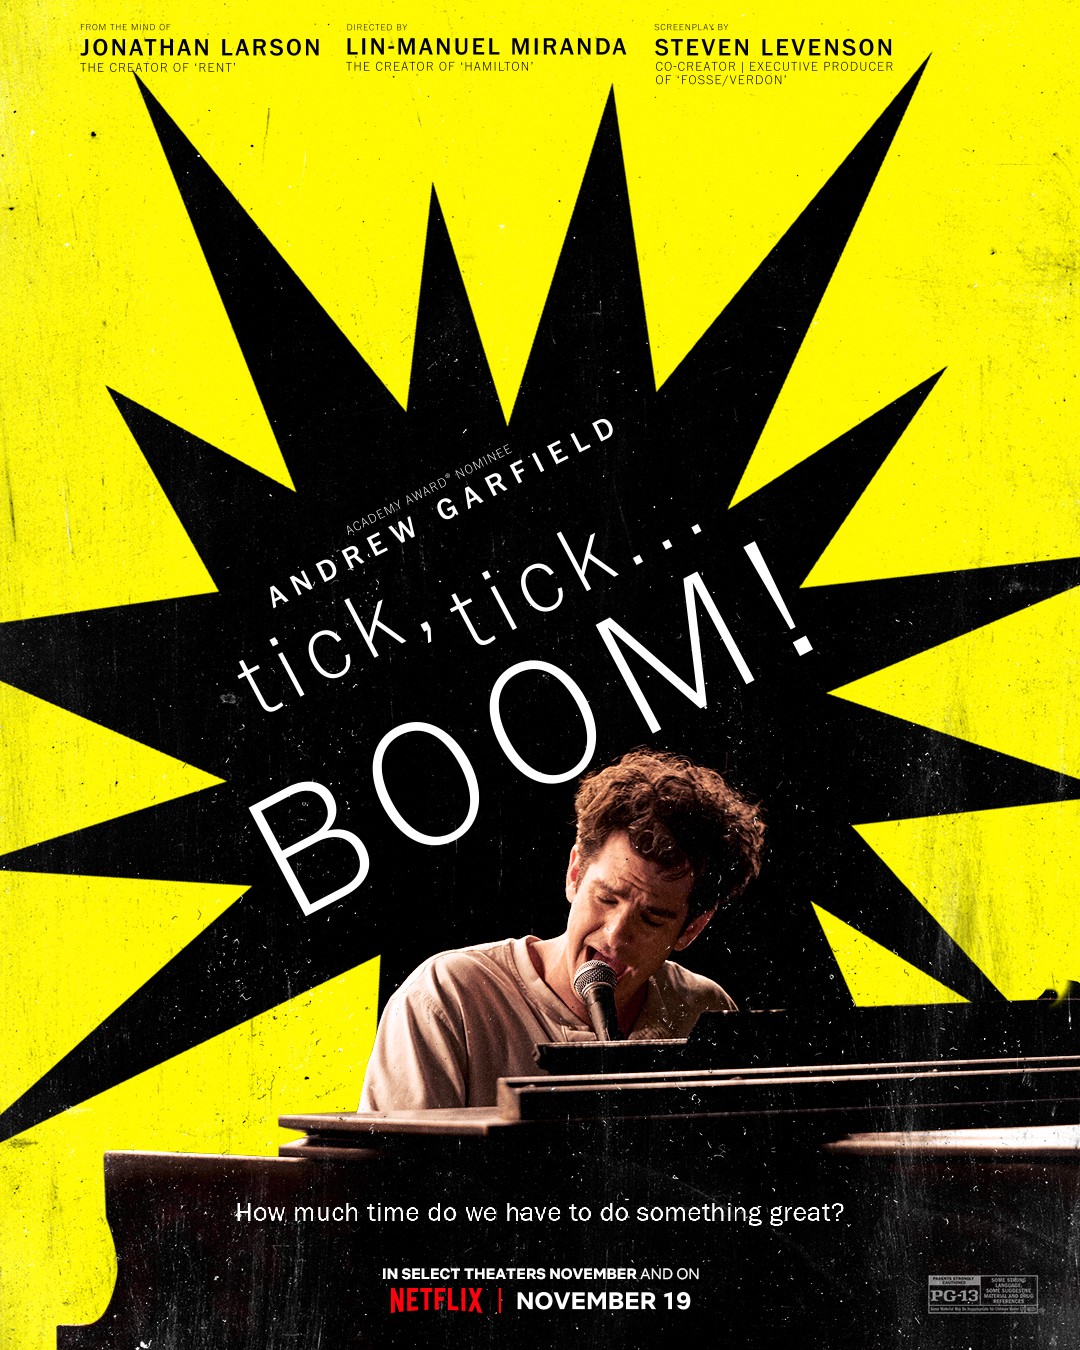 Andrew Garfield as Jonathan Larson in Tick, Tick...BOOM!